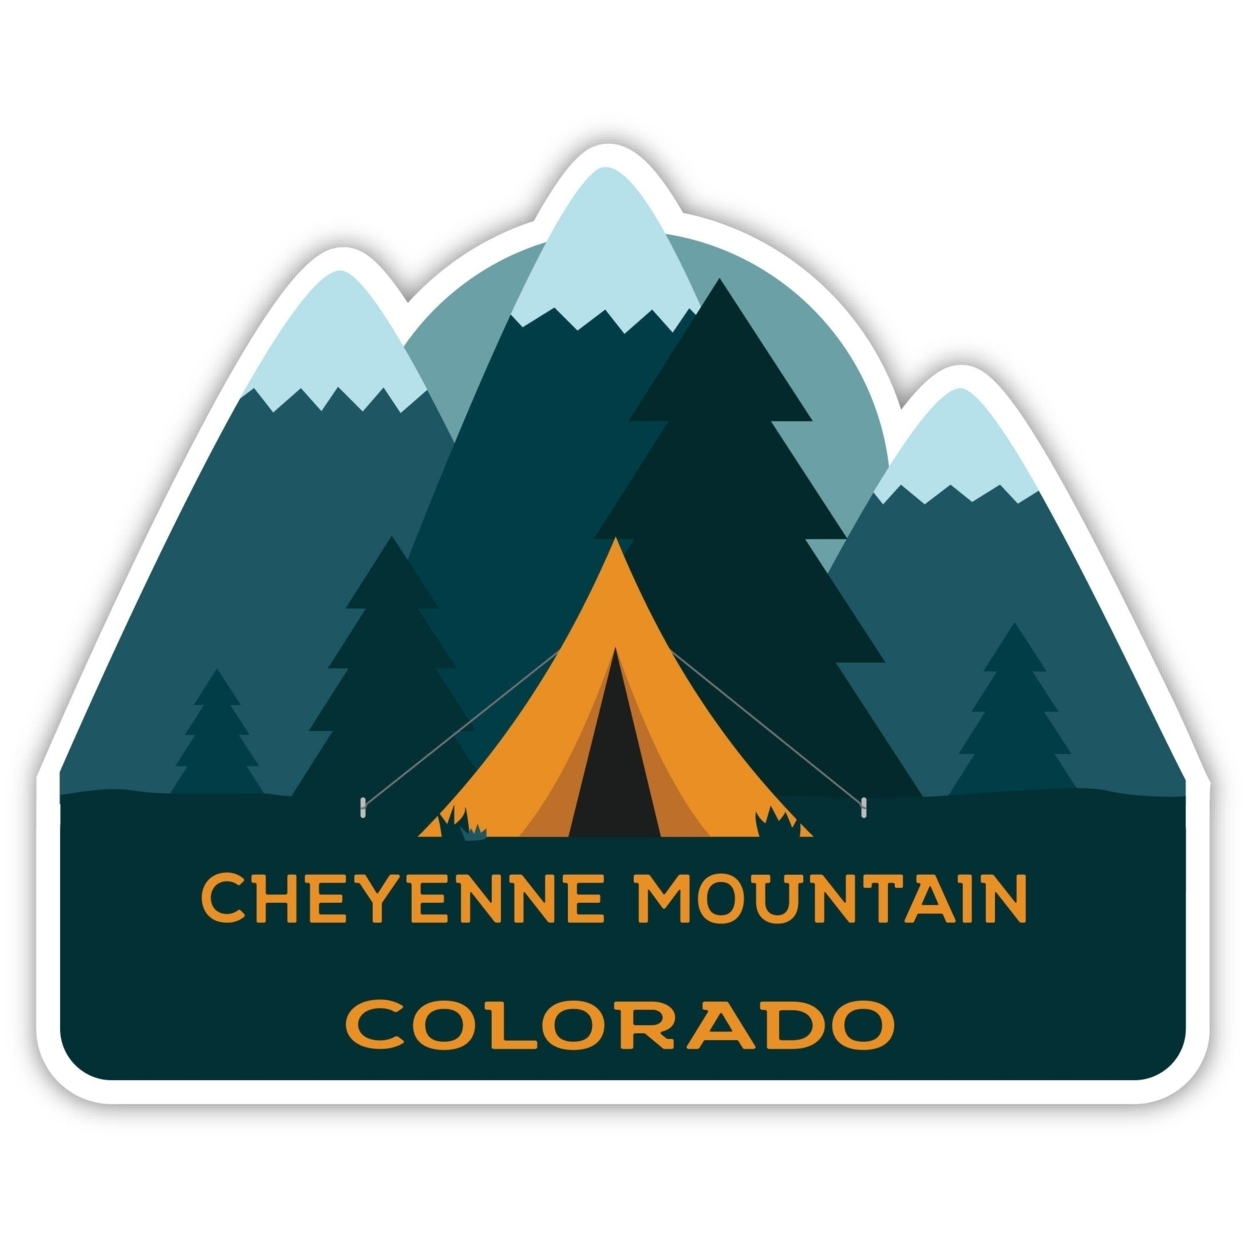 Cheyenne Mountain Colorado Souvenir Decorative Stickers (Choose Theme And Size) - 4-Pack, 4-Inch, Bear